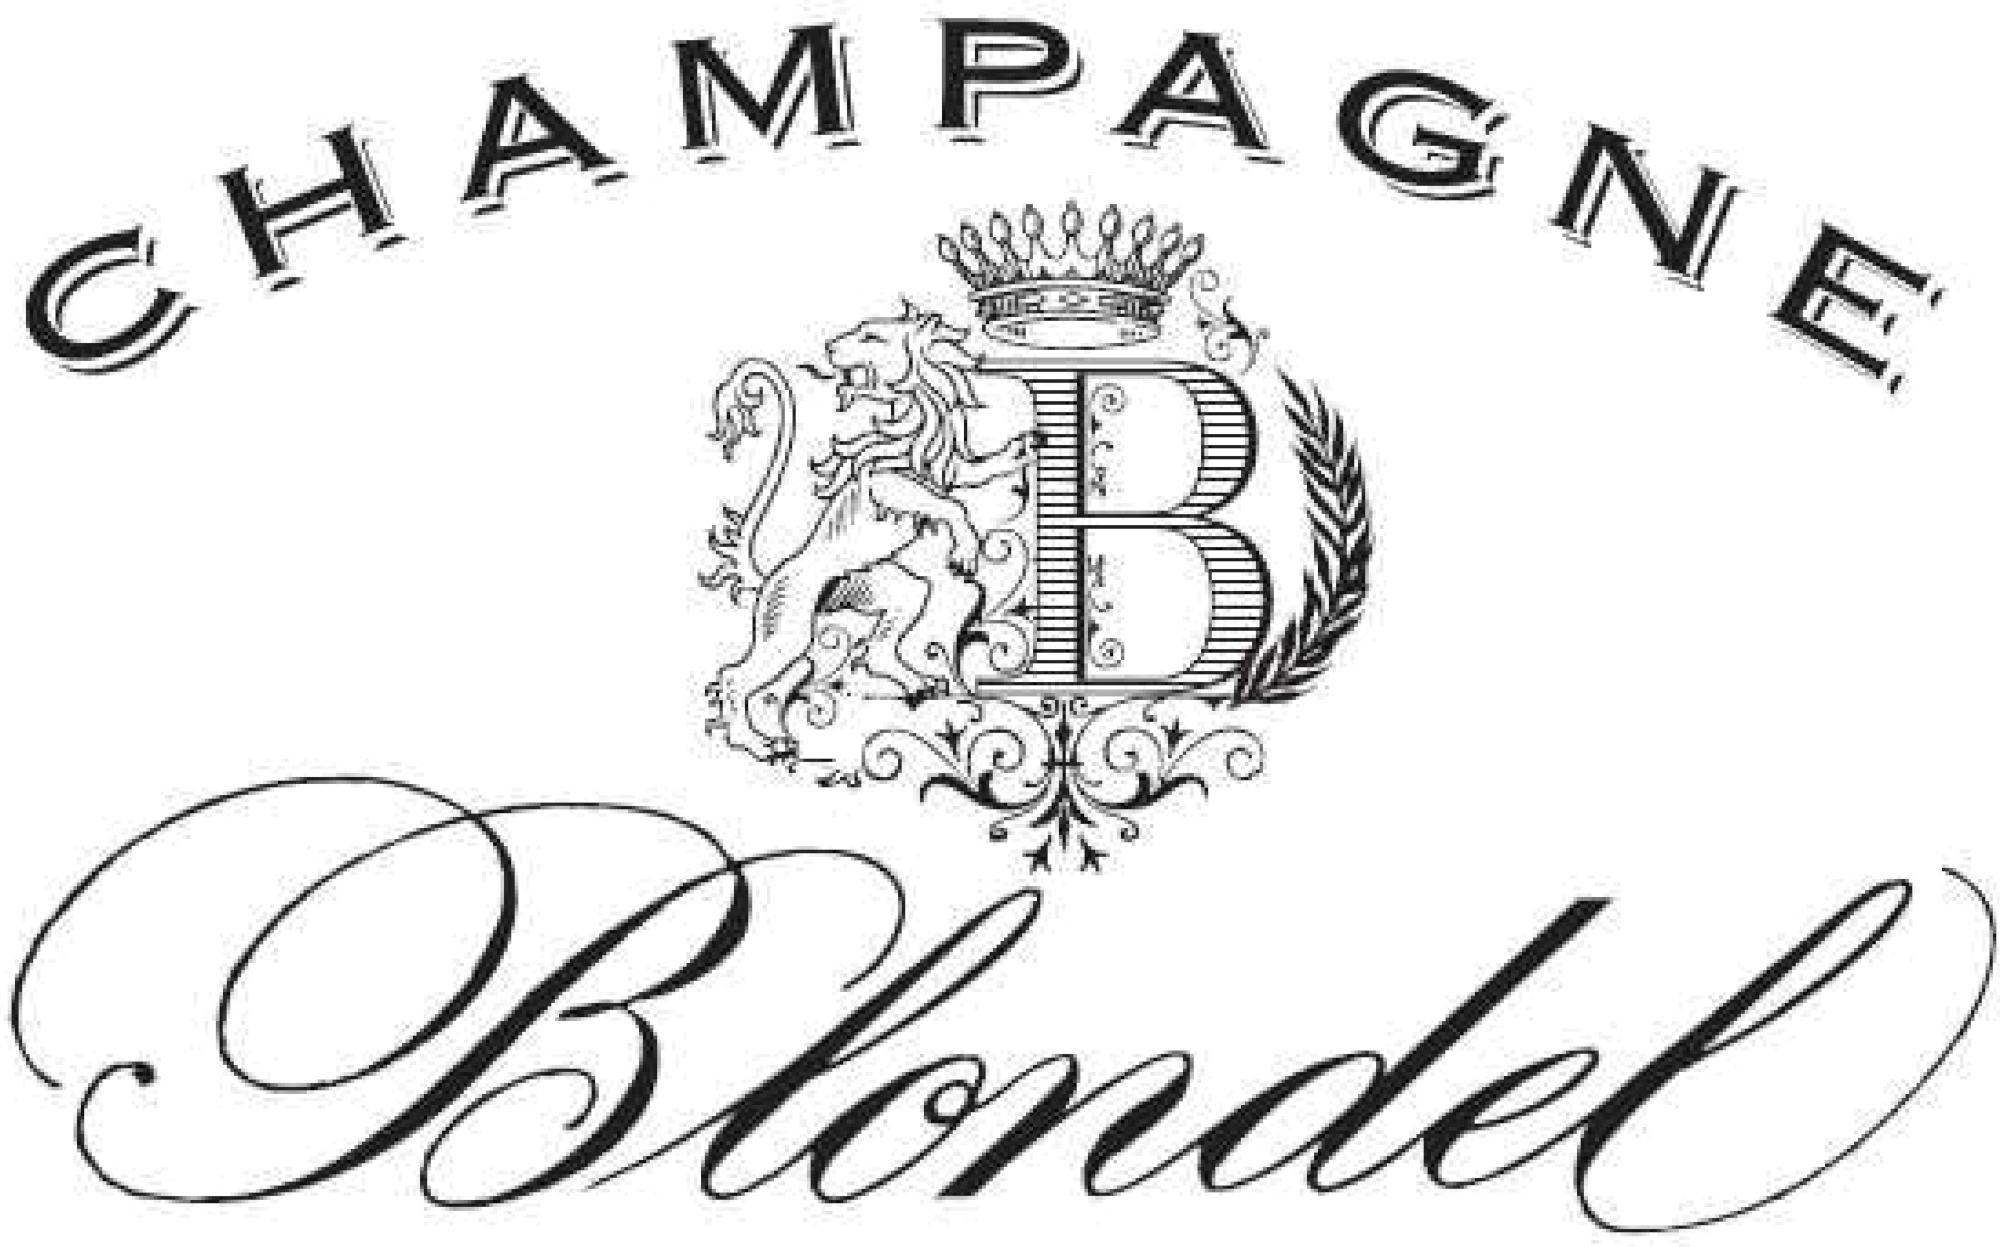 Champagne Blondel